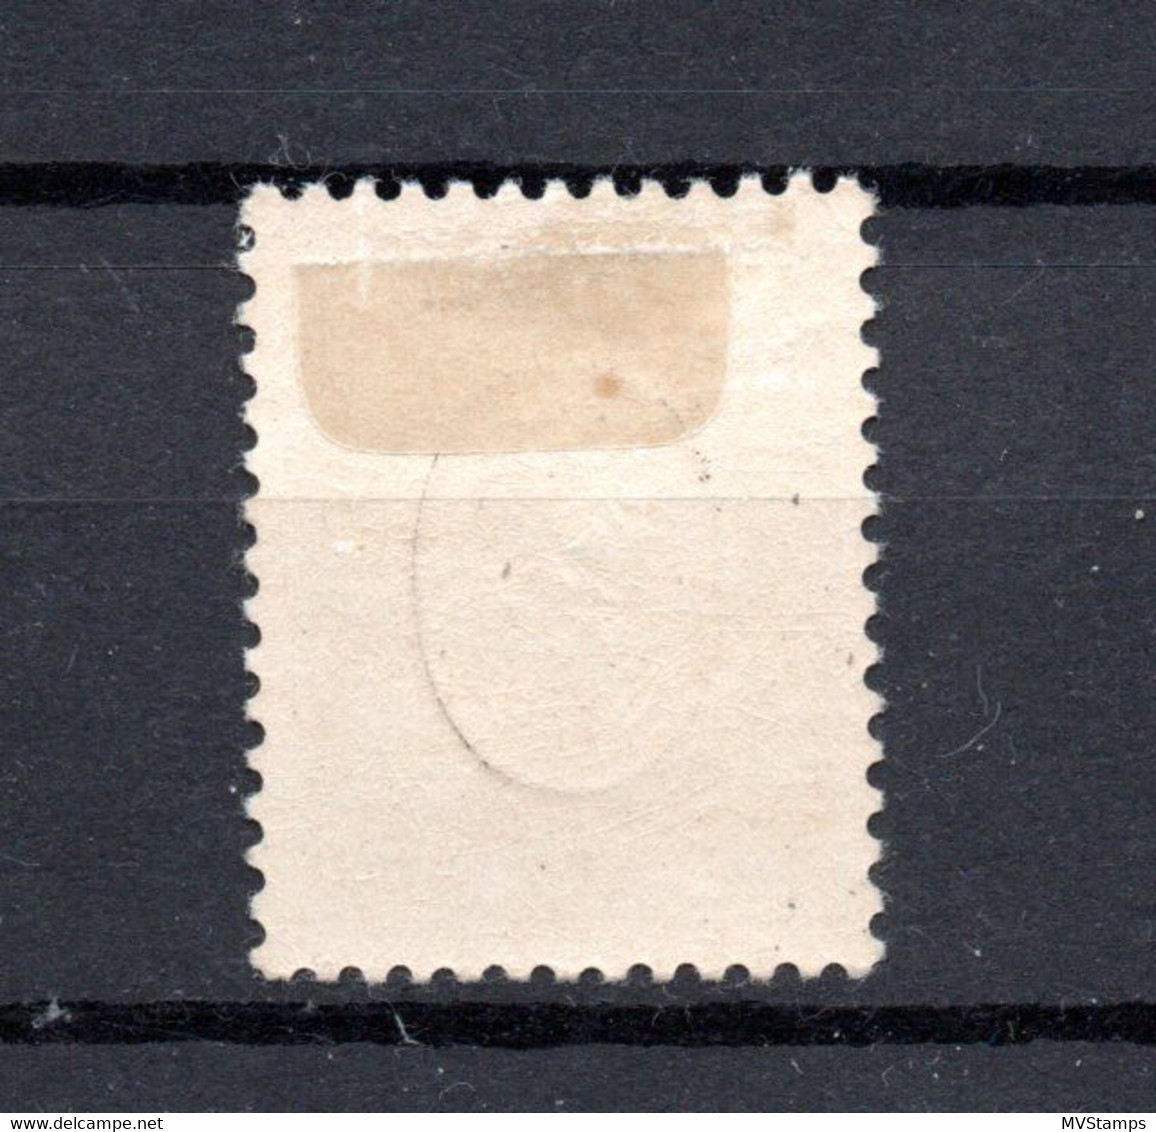 Bulgaria 1927 Old Overprinted Airmail Stamp (Michel 209) Nice MLH - Poste Aérienne